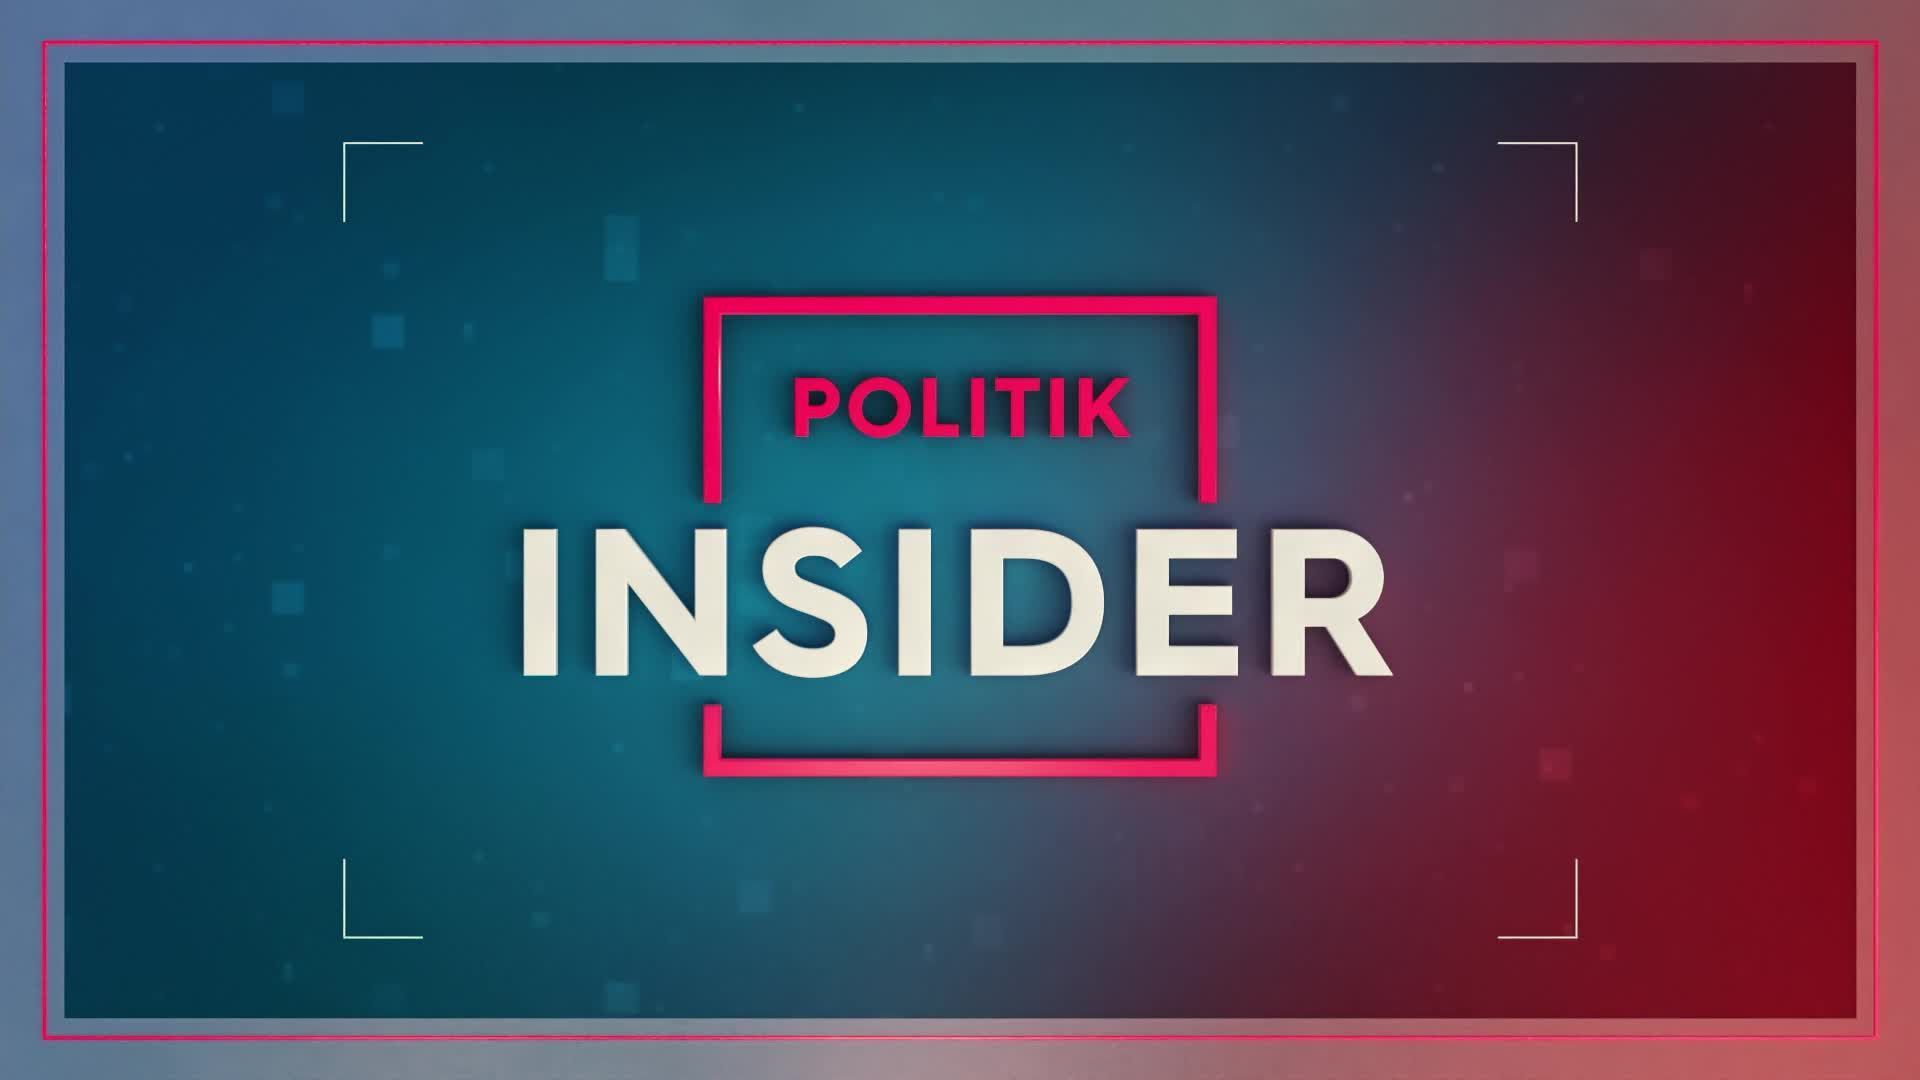 Die Politik-Insider: Christina Aumayr-Hajek und Wolfgang Rosam